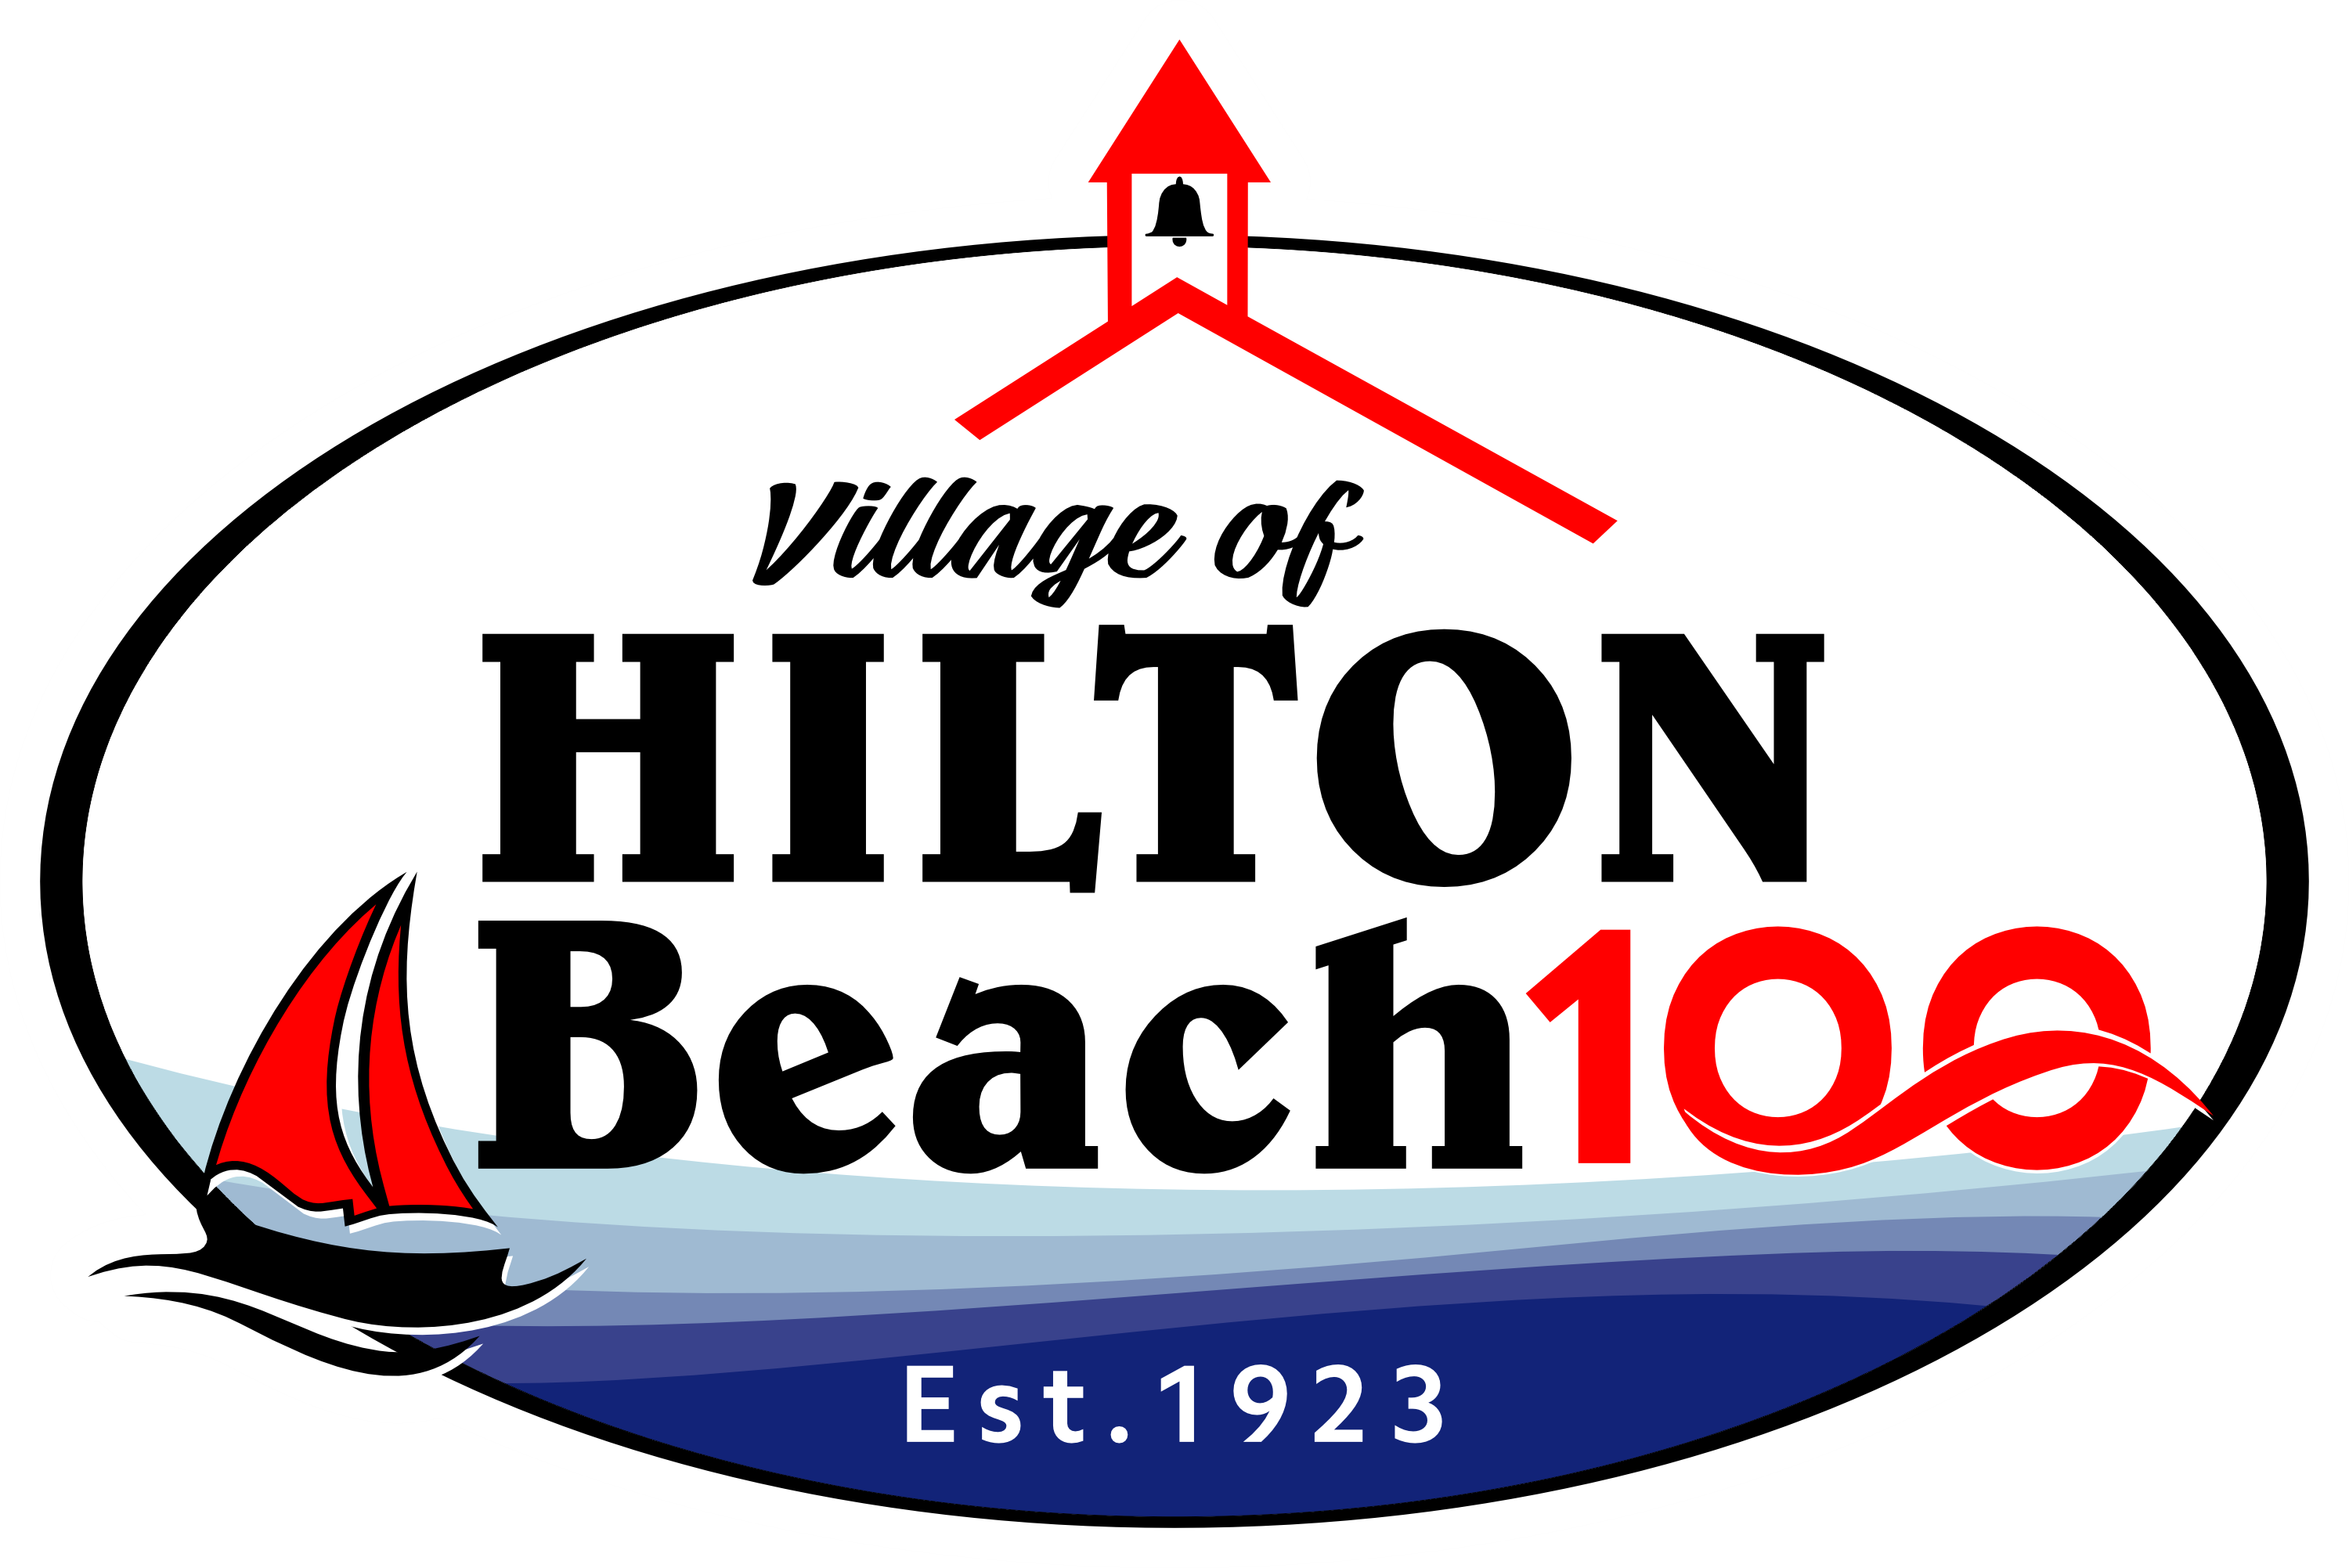 Village of Hilton Beach